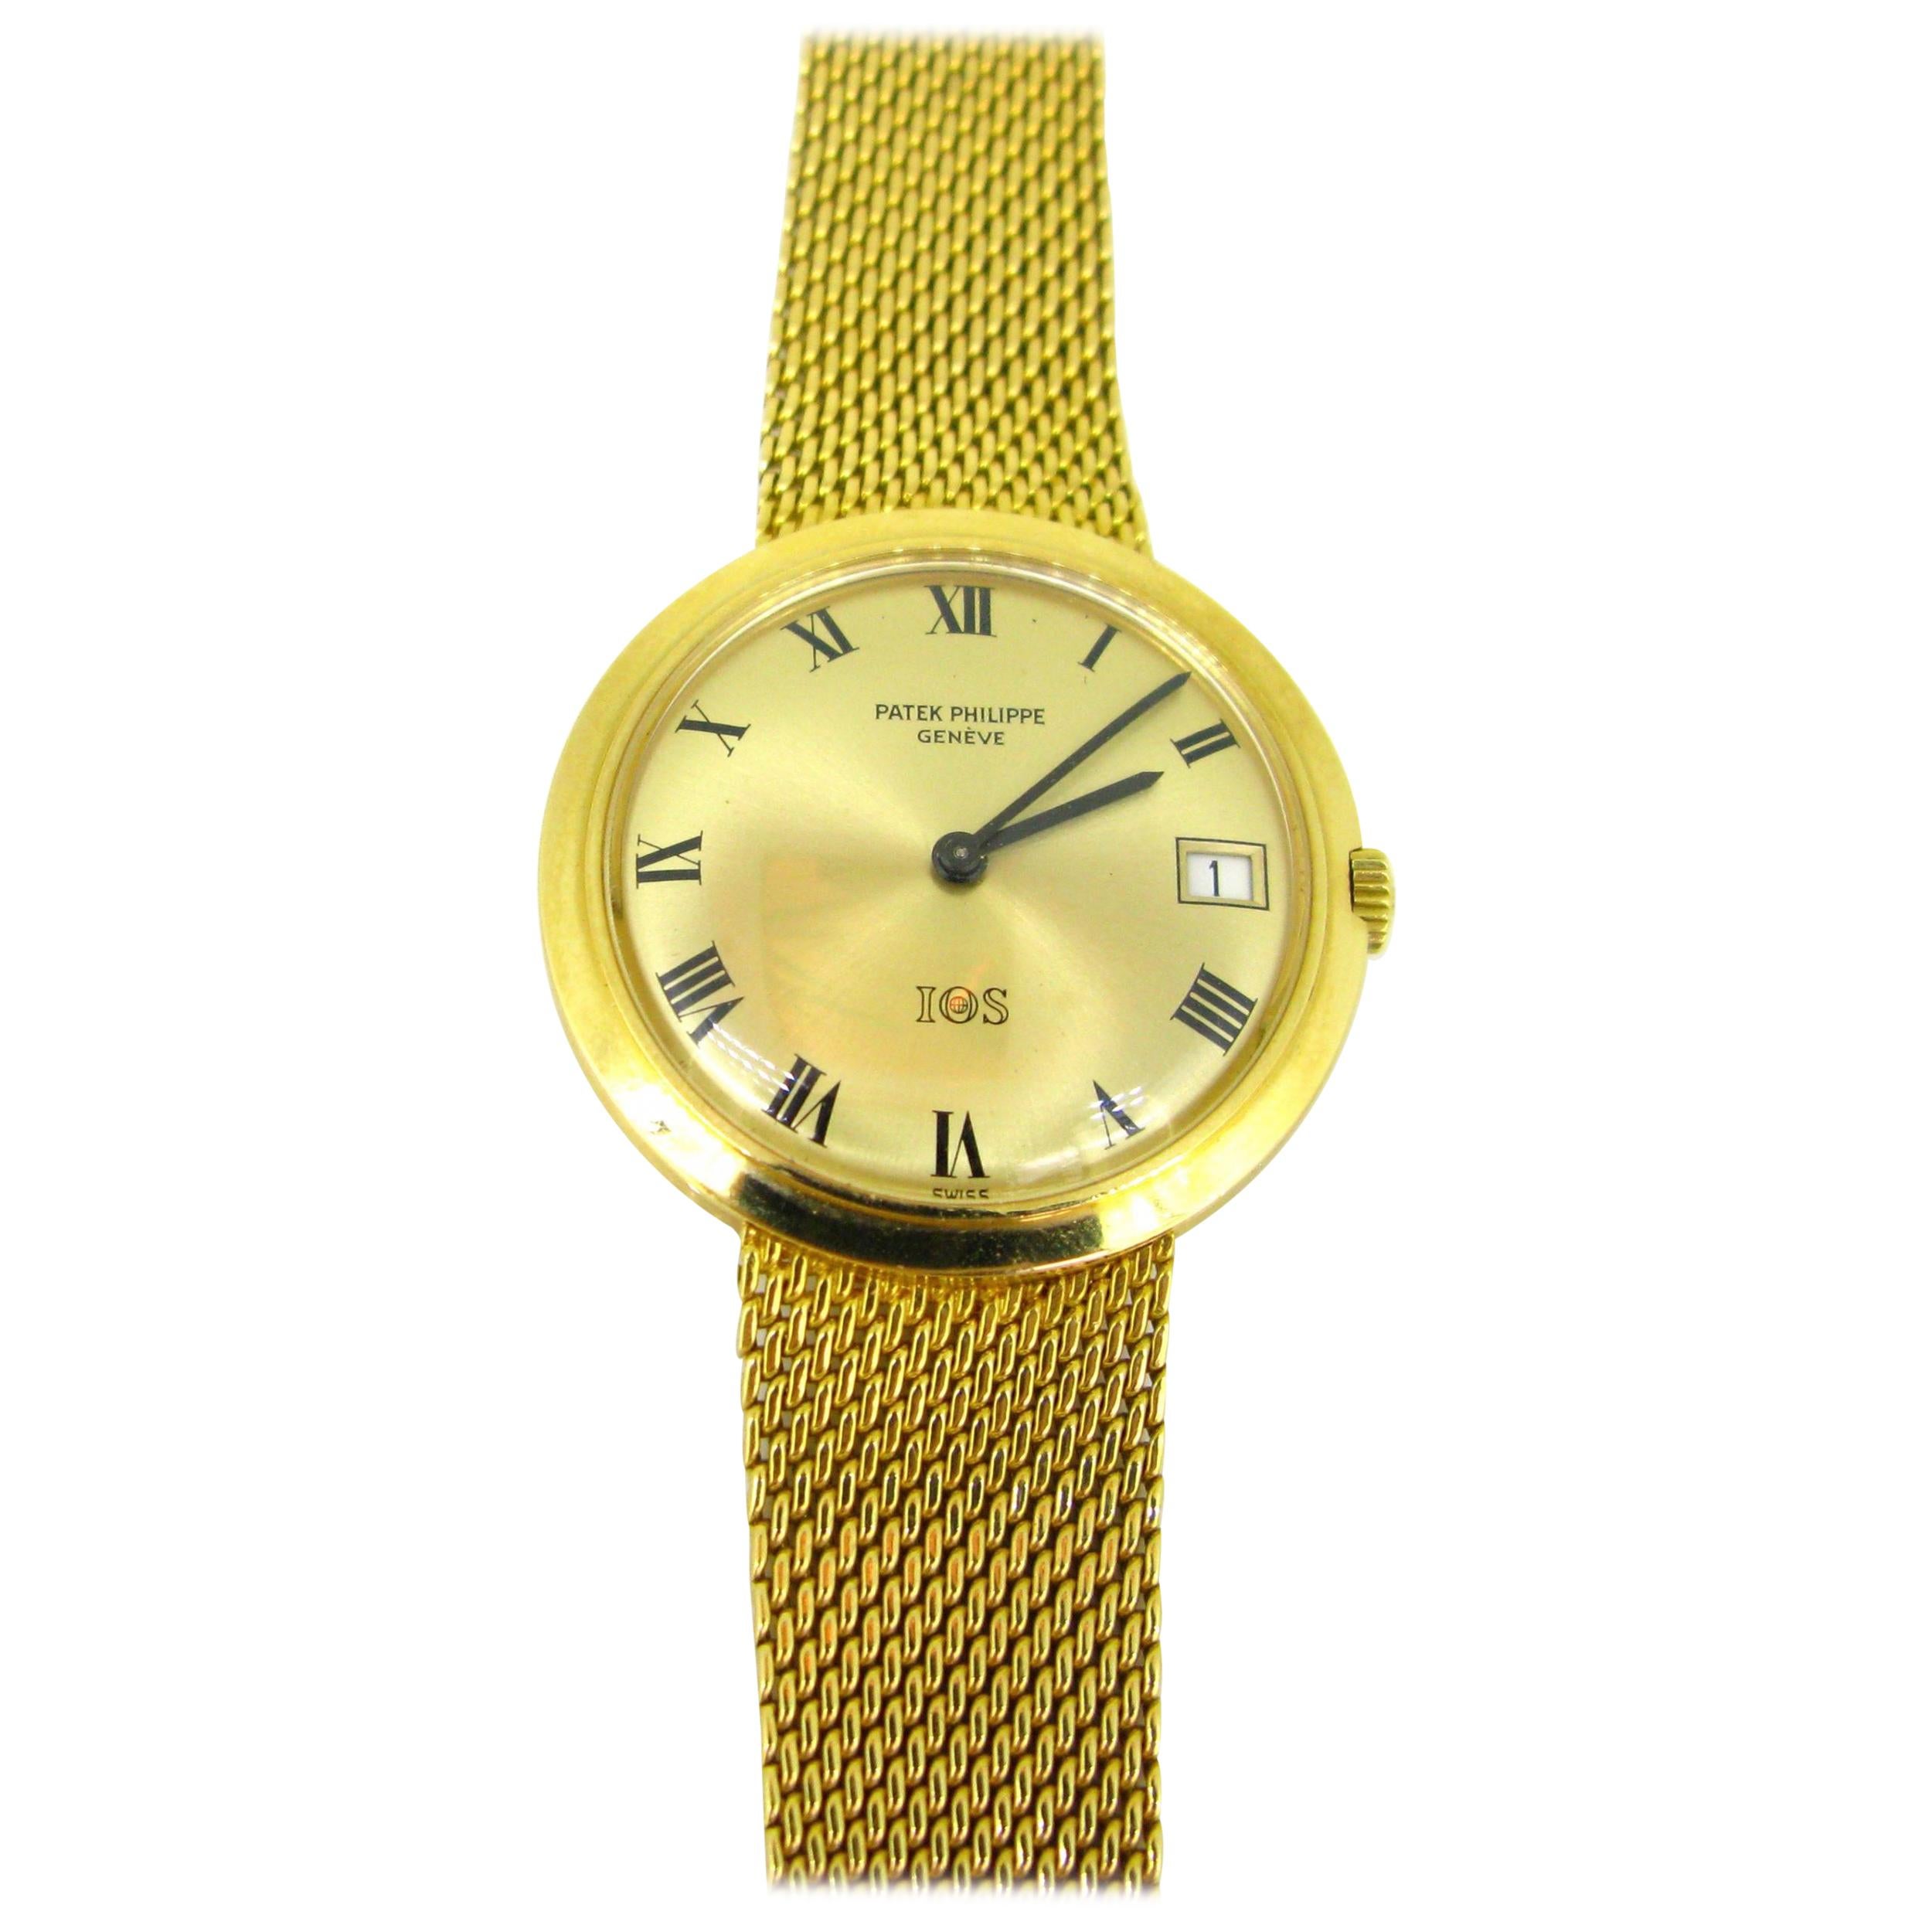 Patek Philippe IOS Million Dollar Yellow Gold Automatic Wristwatch, circa 1970